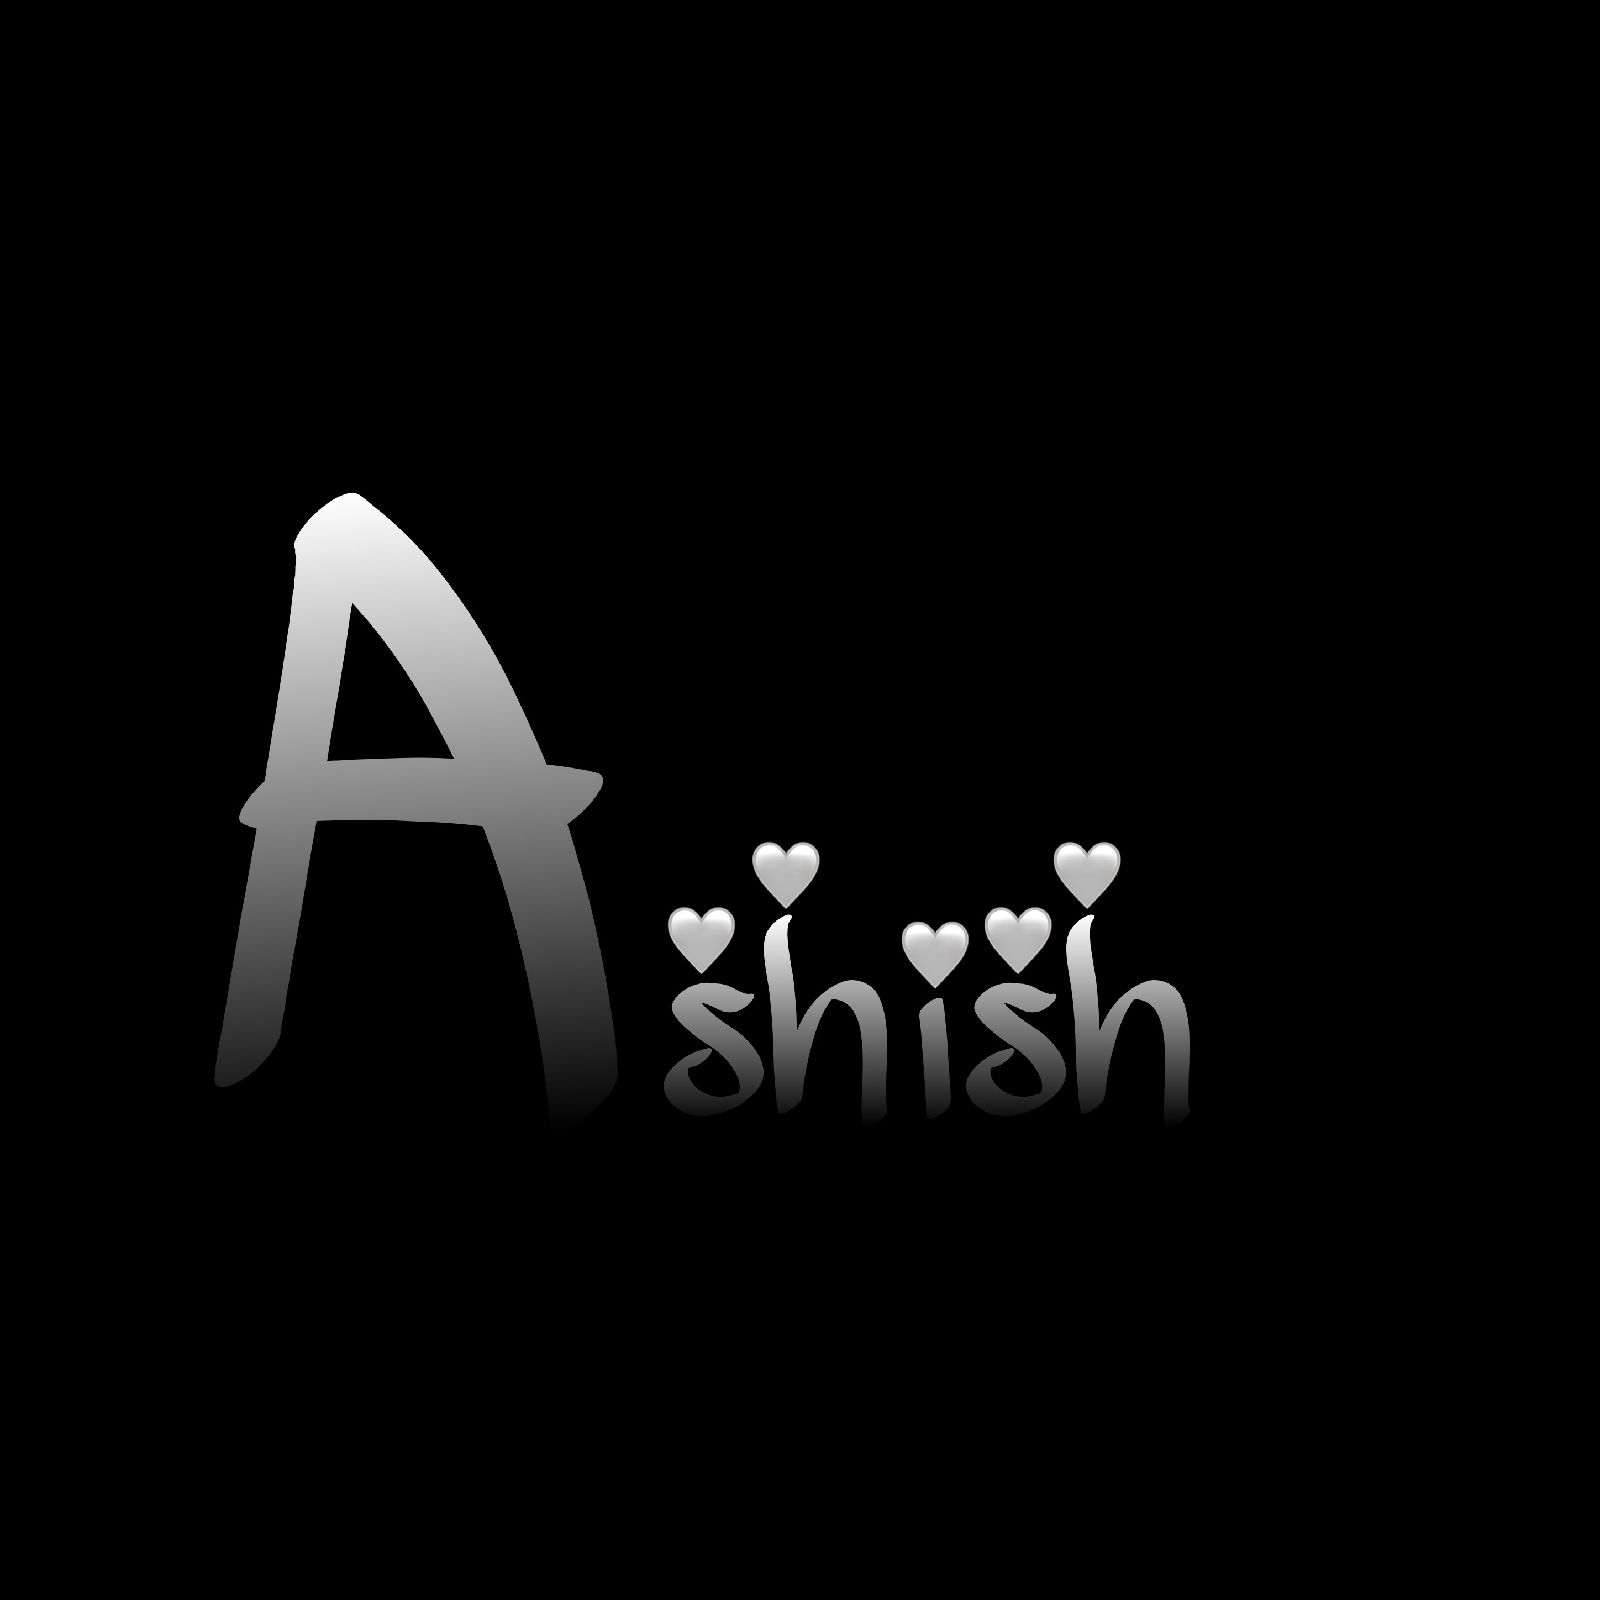 A Name - Ashish